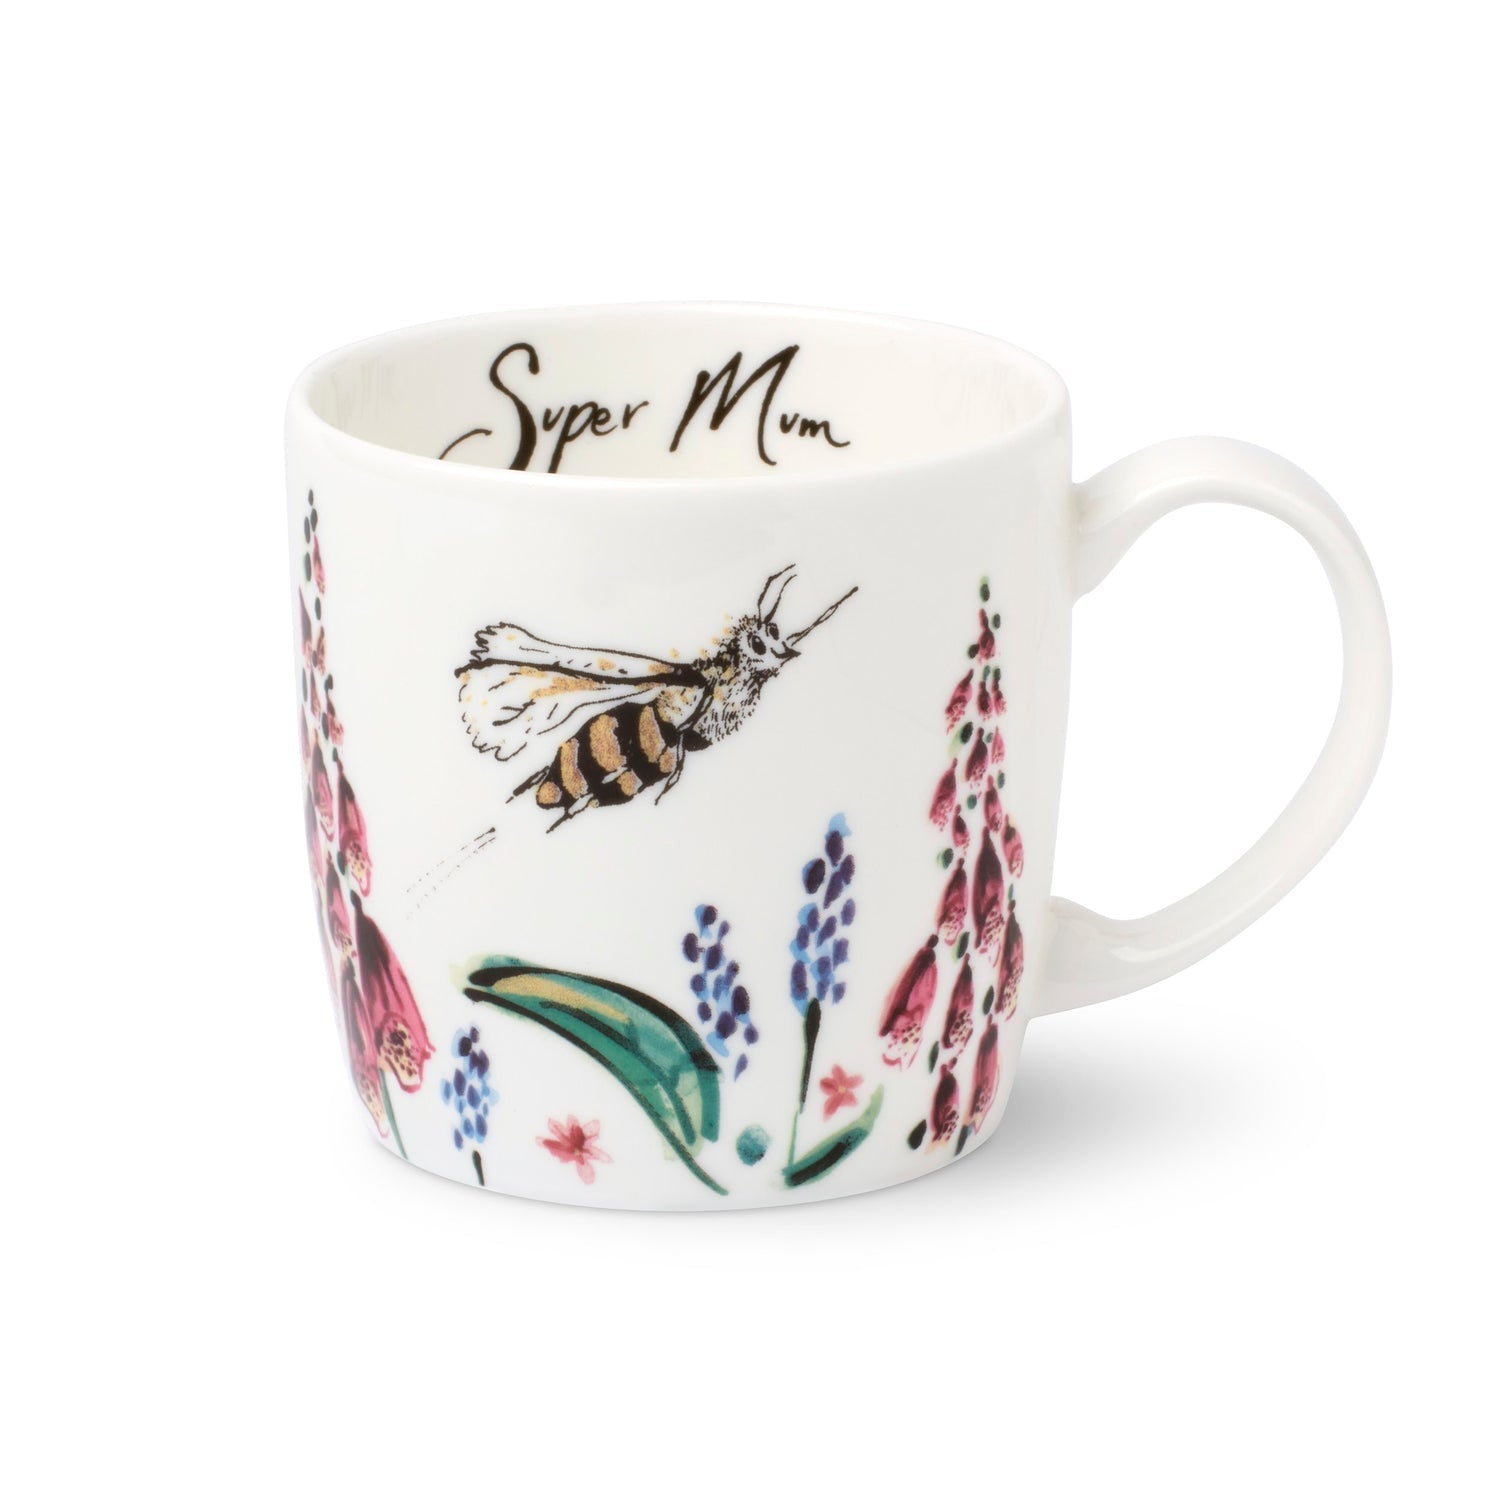 "Super Mum" Mug - The Nancy Smillie Shop - Art, Jewellery & Designer Gifts Glasgow